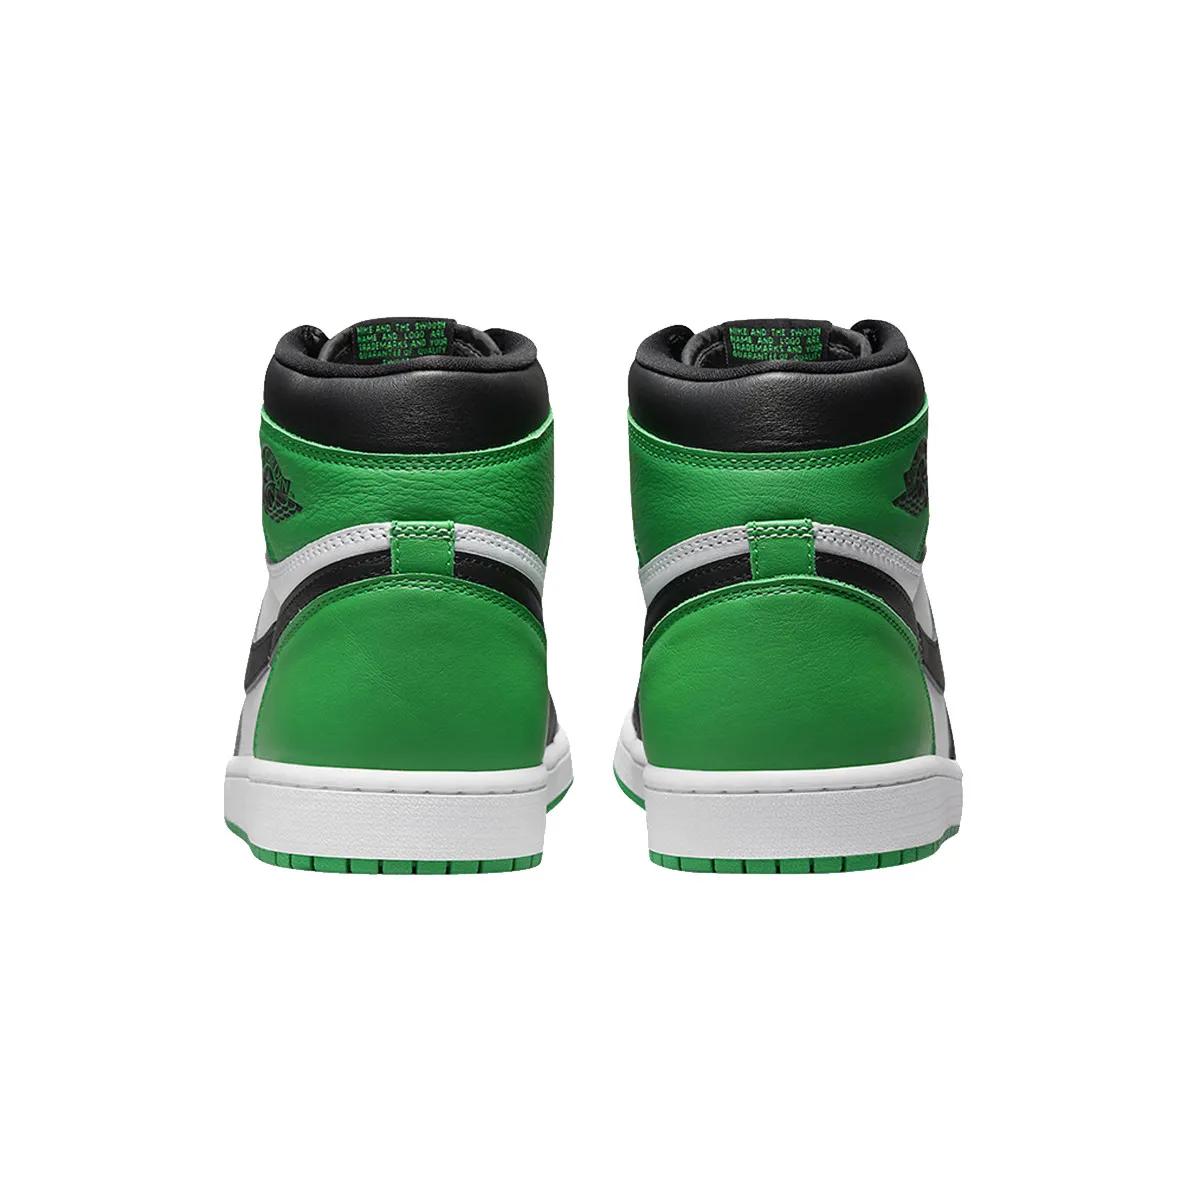 NIKE Patike Air Jordan 1 High Black and Lucky Green 